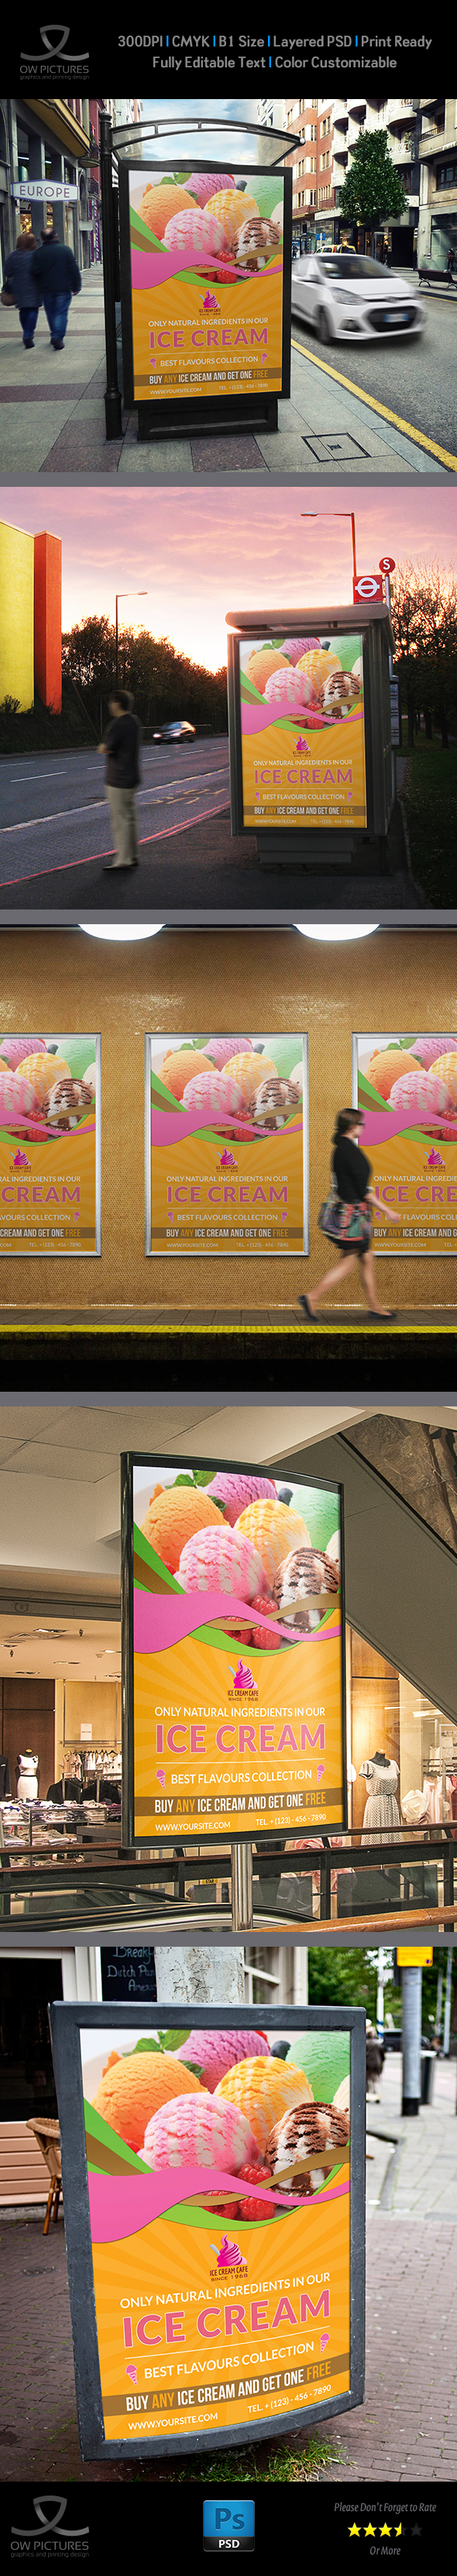 ad advertisements billboard cafe cake Coffee drink energy flyer Food  ice cream institute market